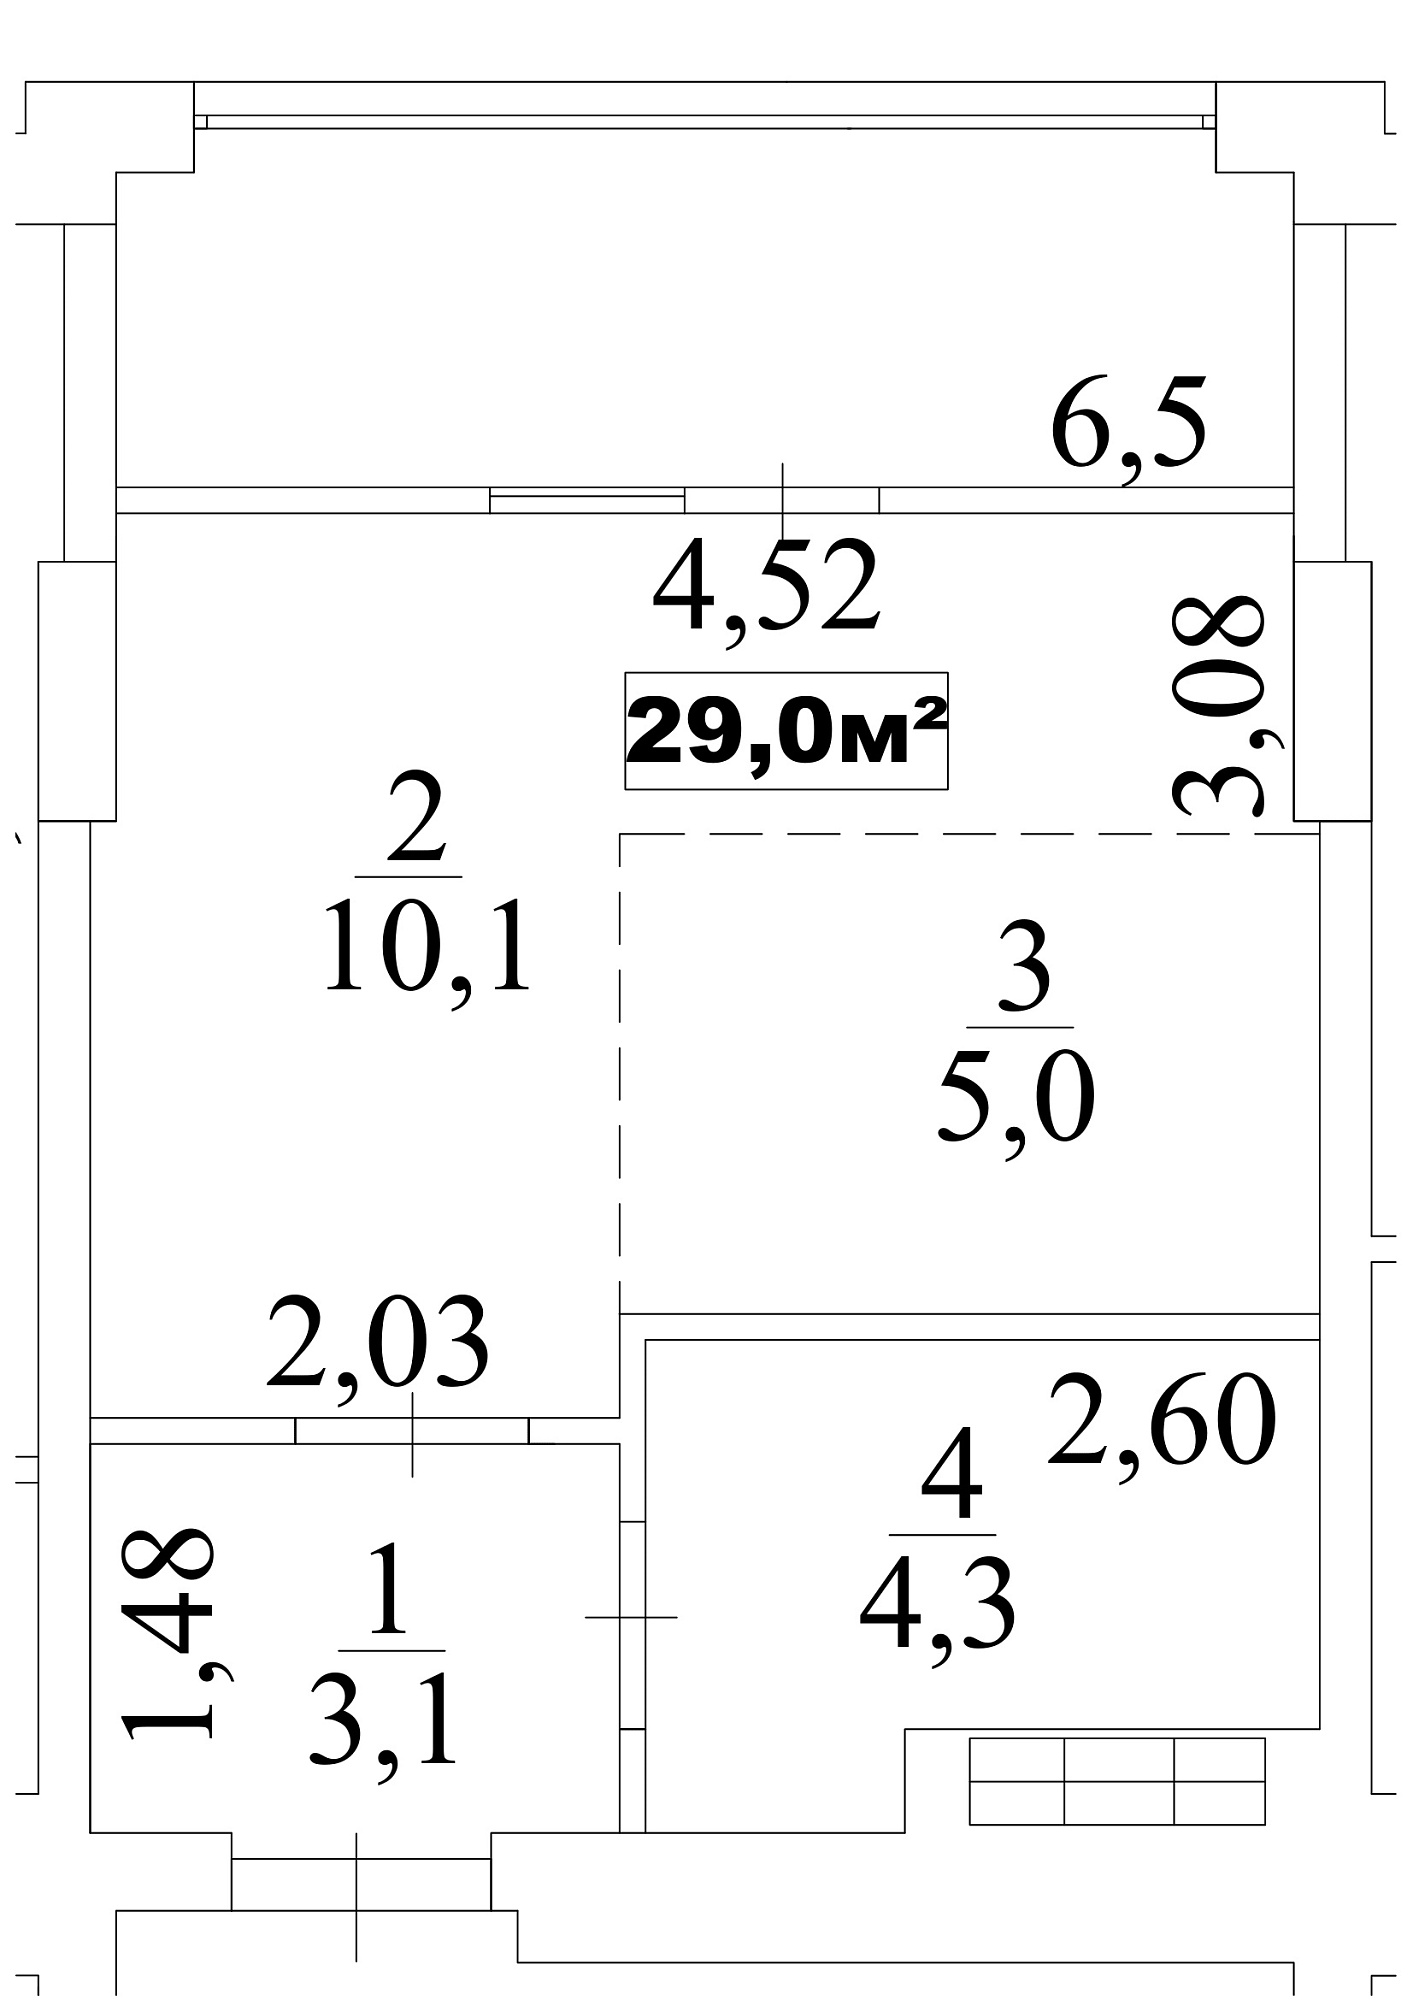 Планировка Smart-квартира площей 29м2, AB-10-06/00050.